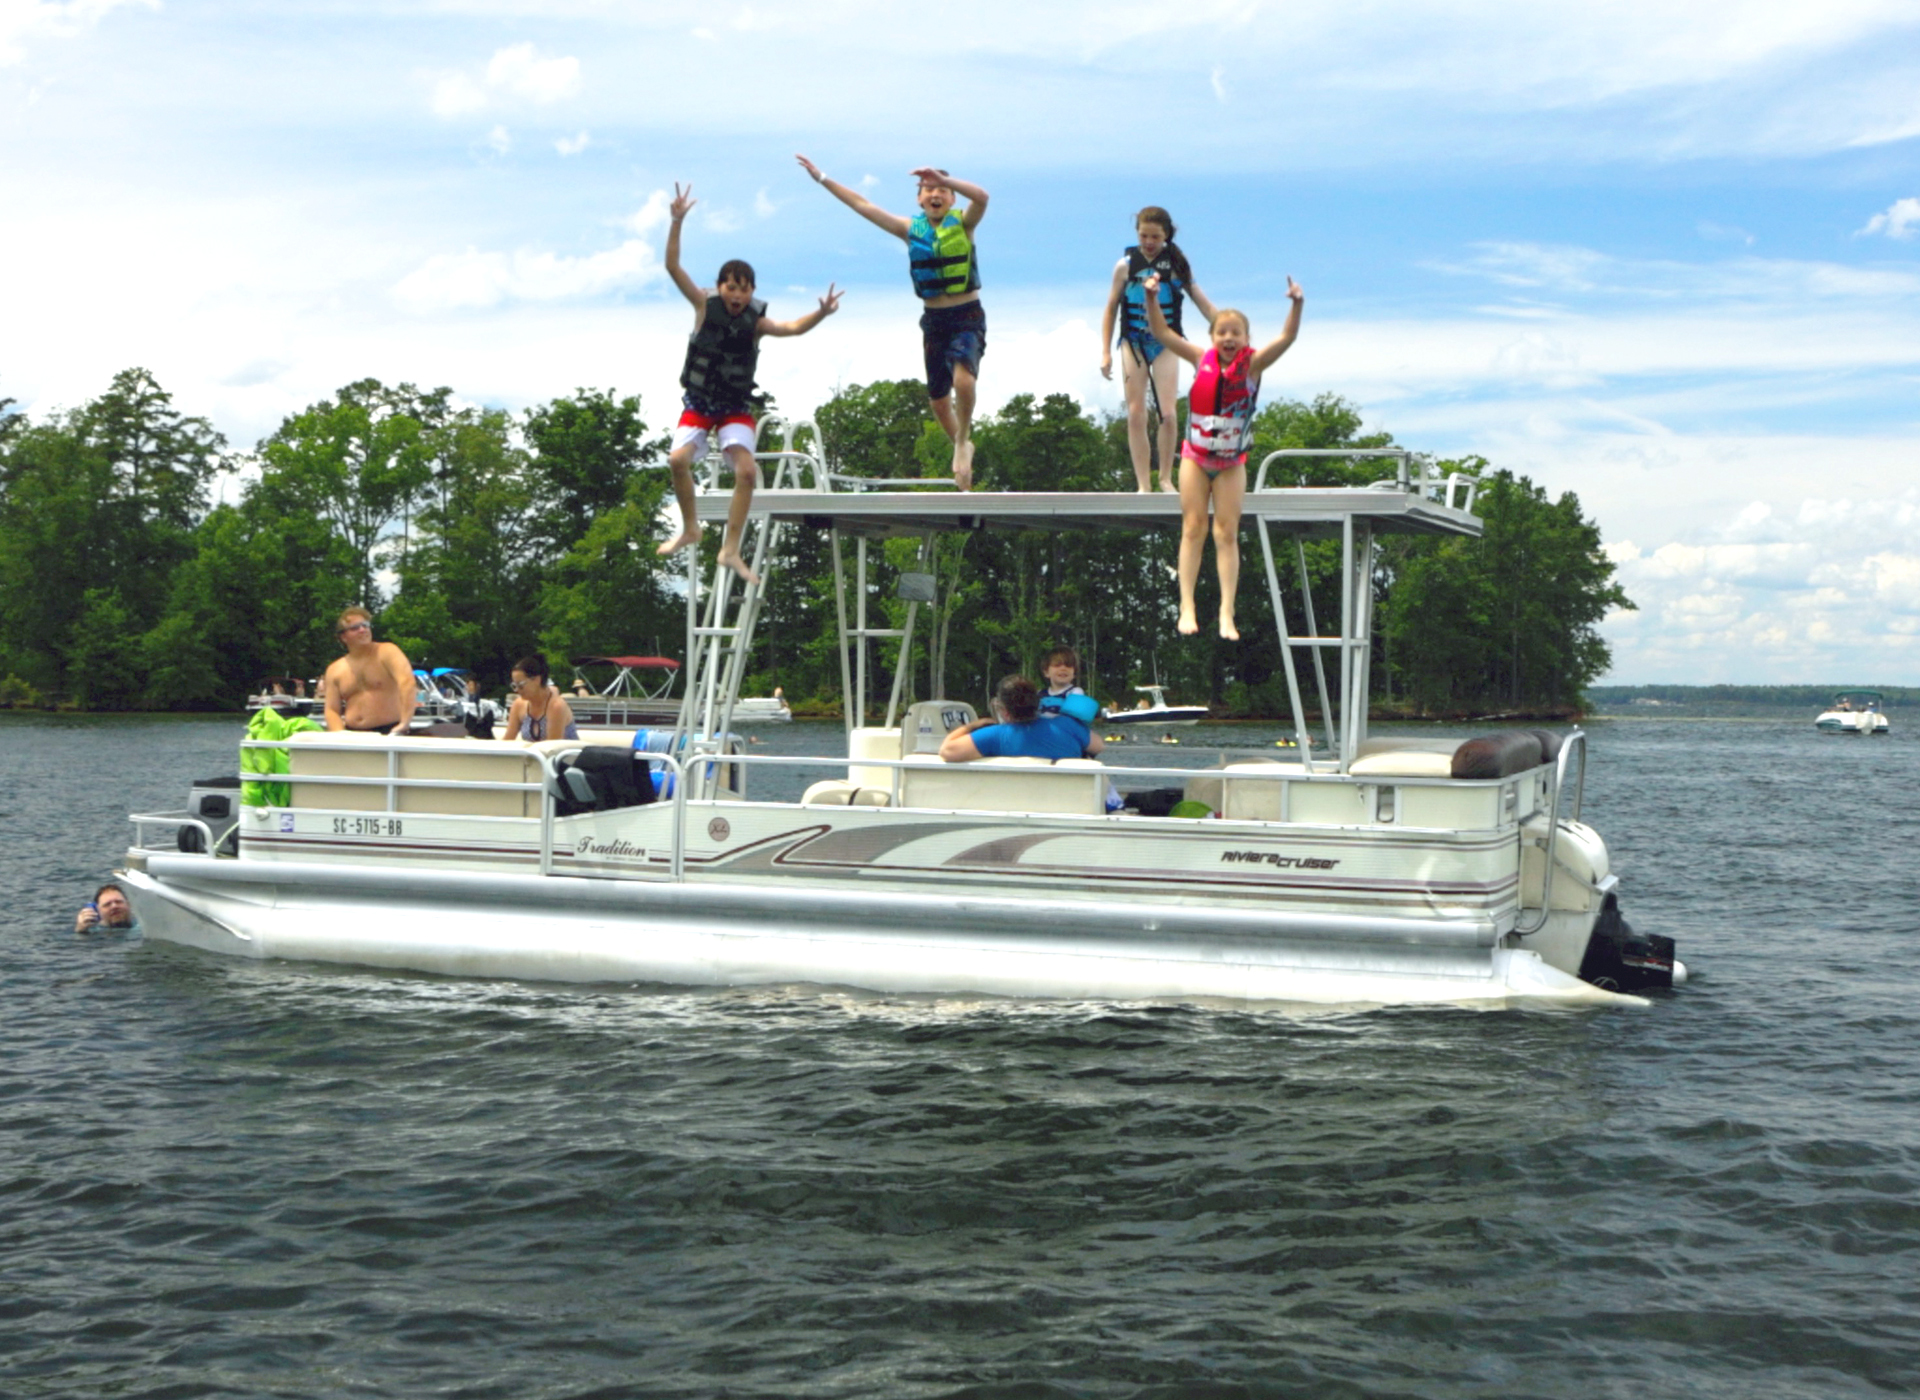 4th of July on Lake Murray, SC  |  Boat Parade